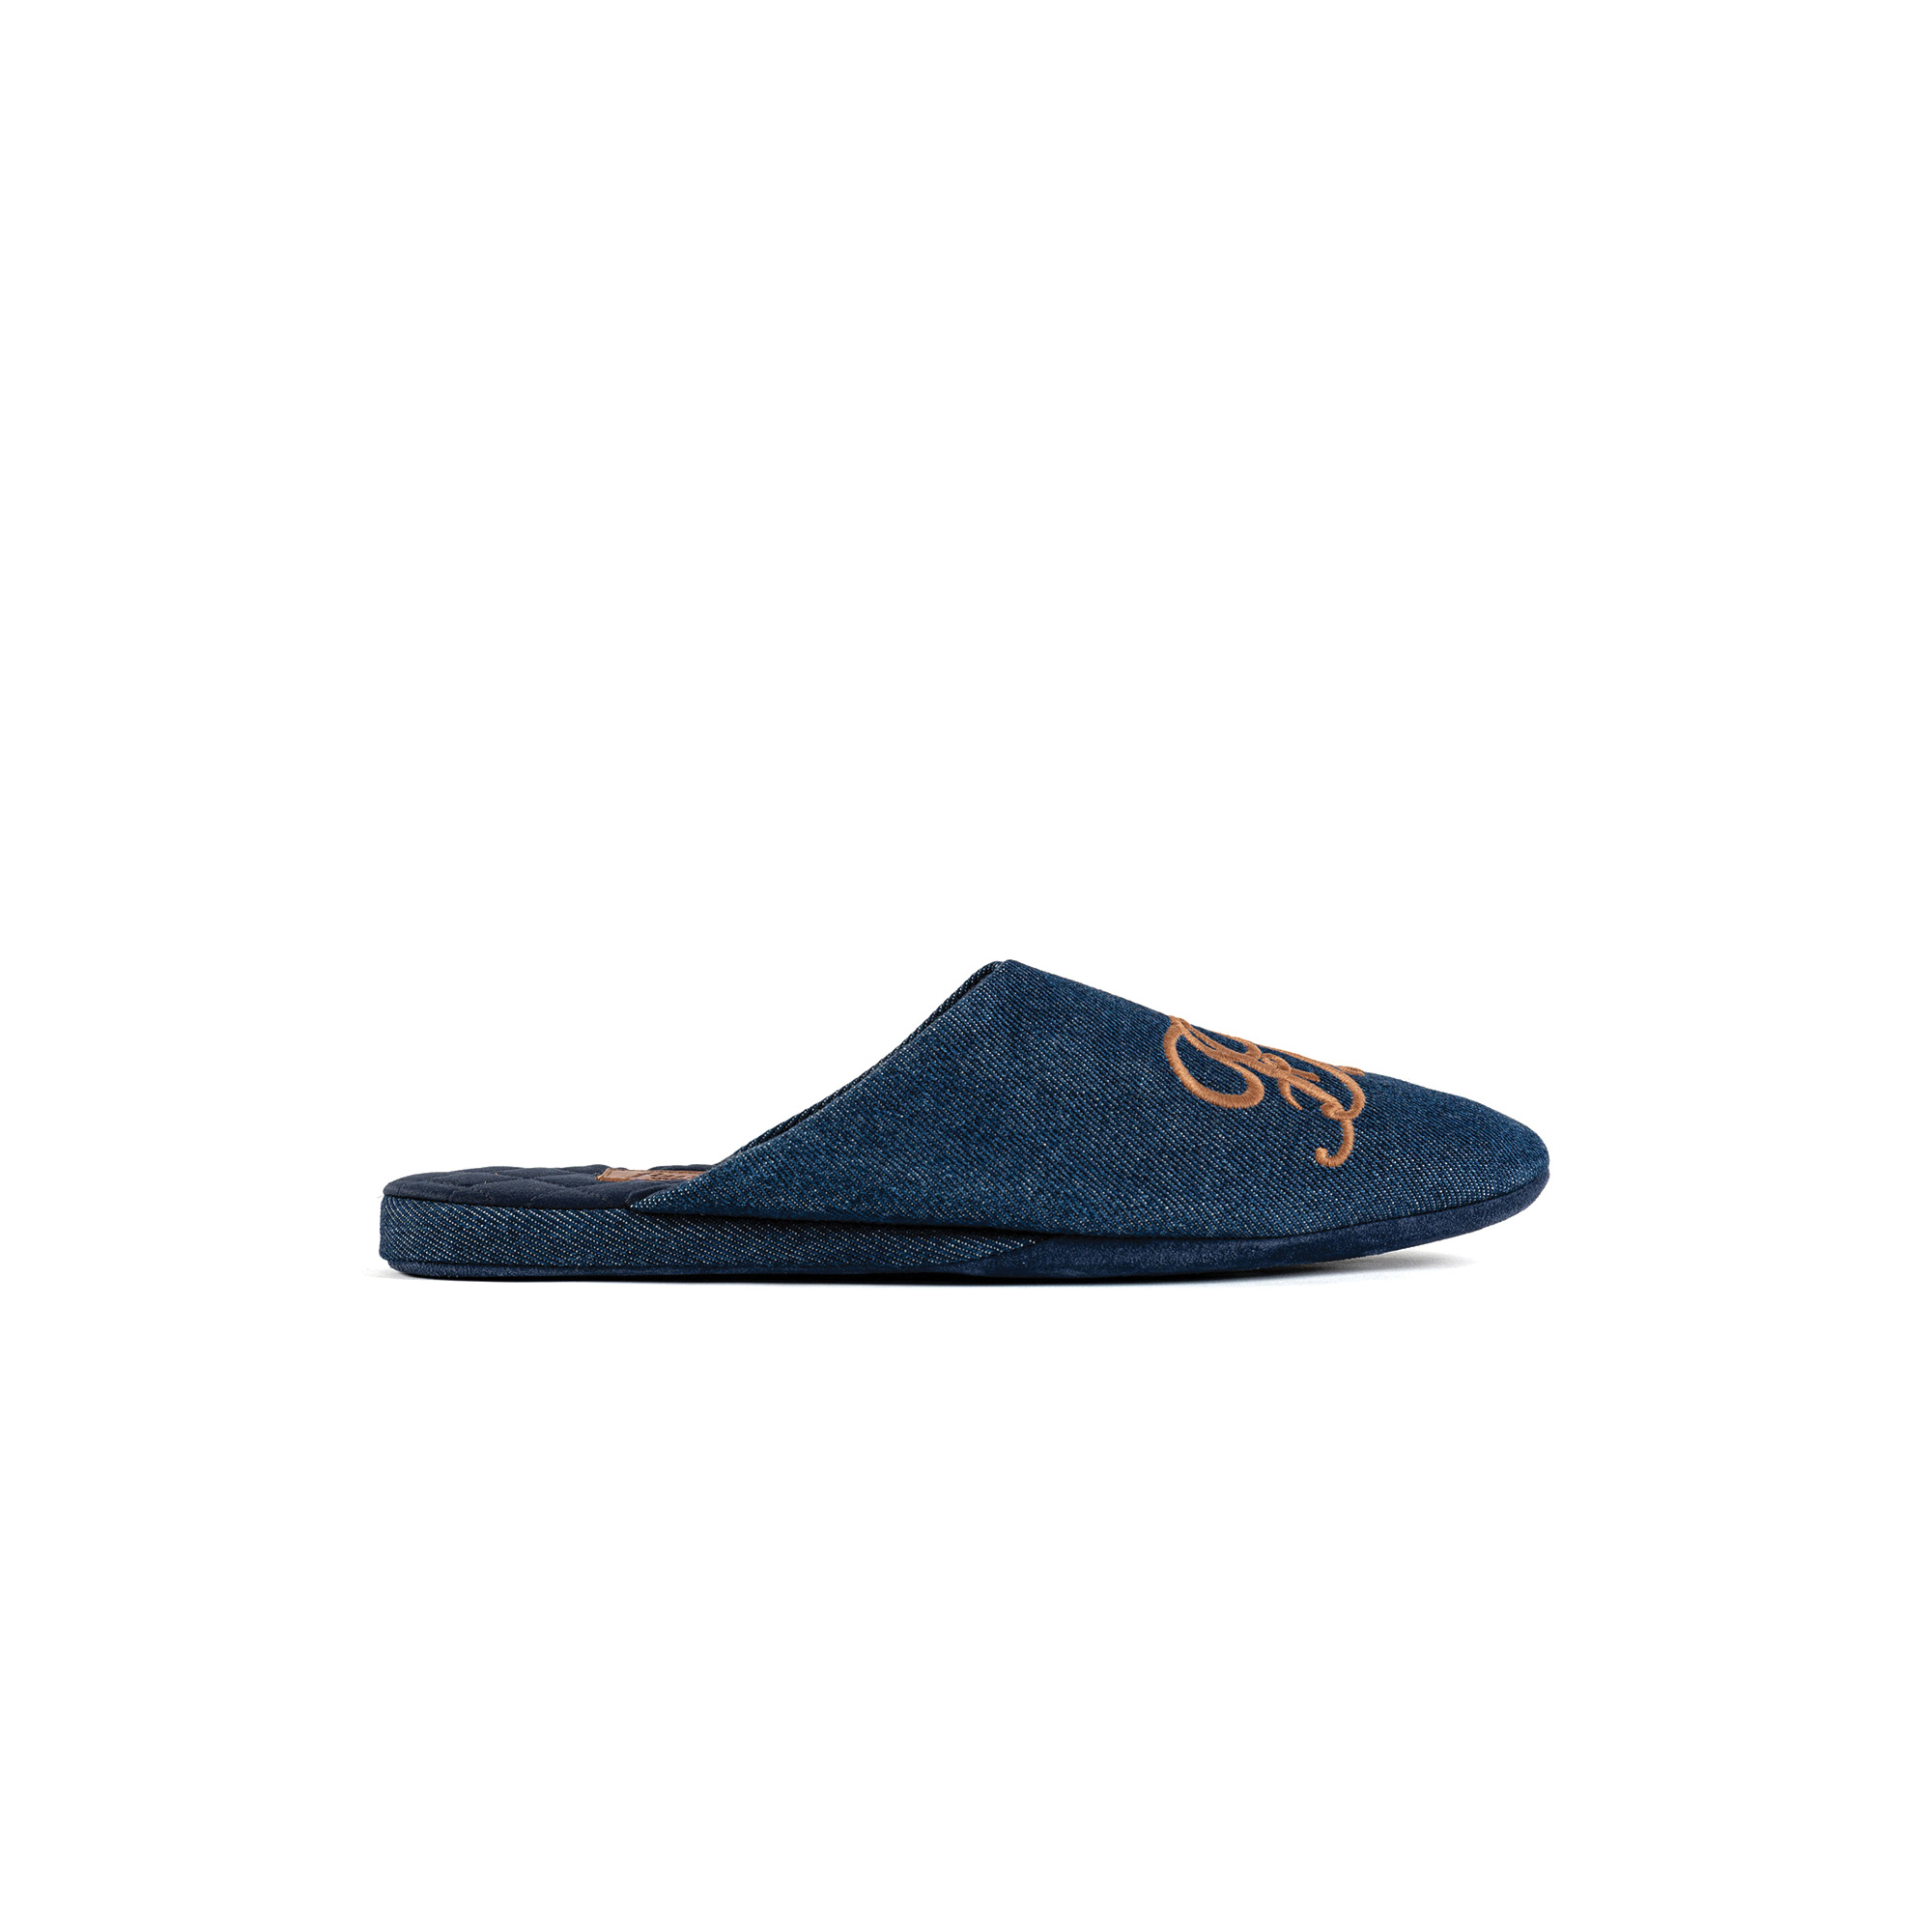 Classic indoor slipper in denim fabric - Farfalla italian slippers